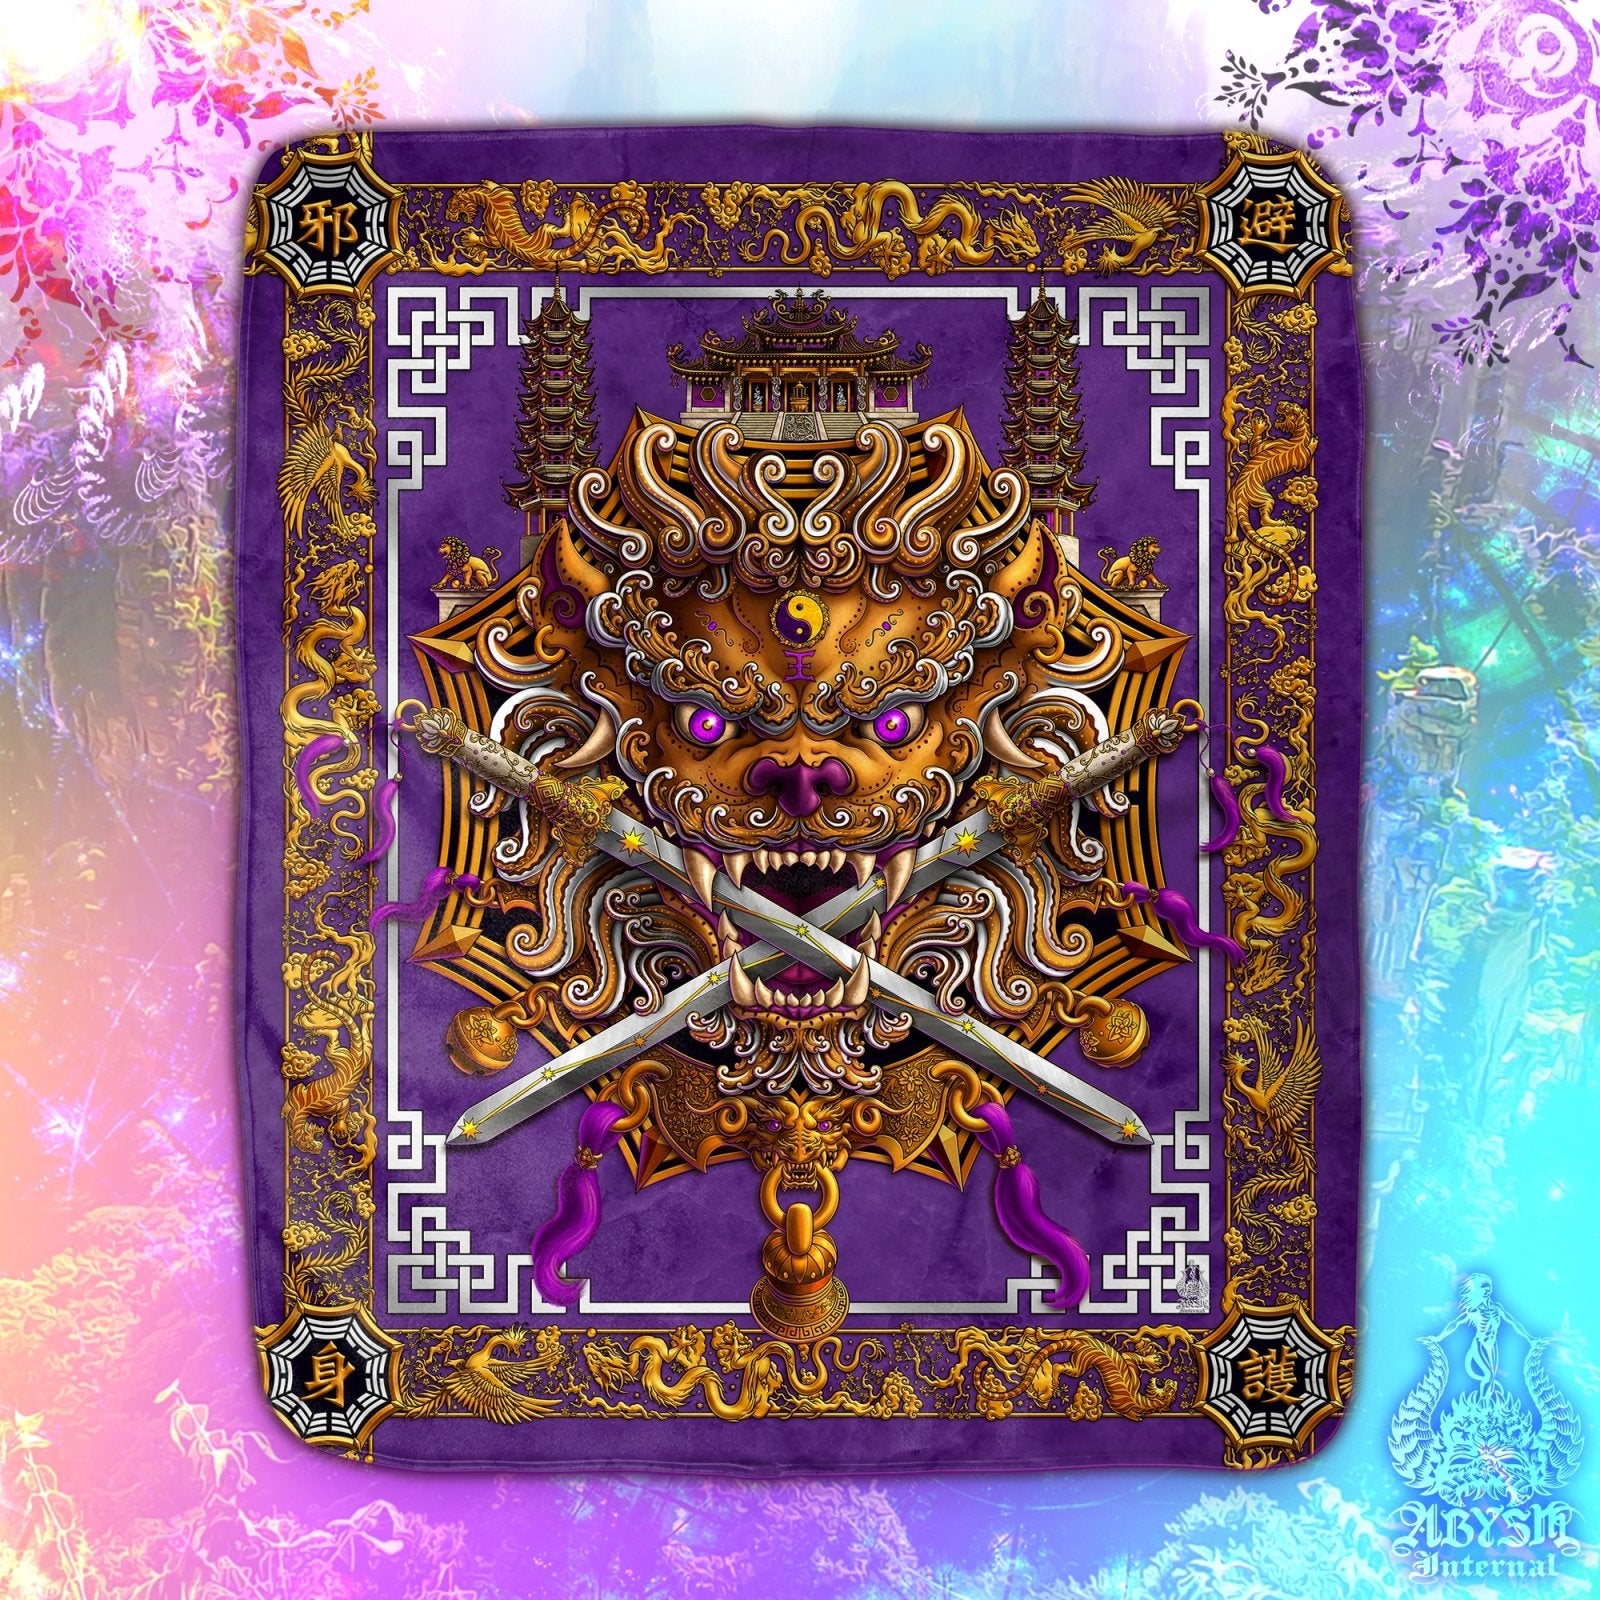 Asian Lion Throw Fleece Blanket, Taiwan Sword Lion, Chinese Art, Gamer Room Decor - Purple & White - Abysm Internal